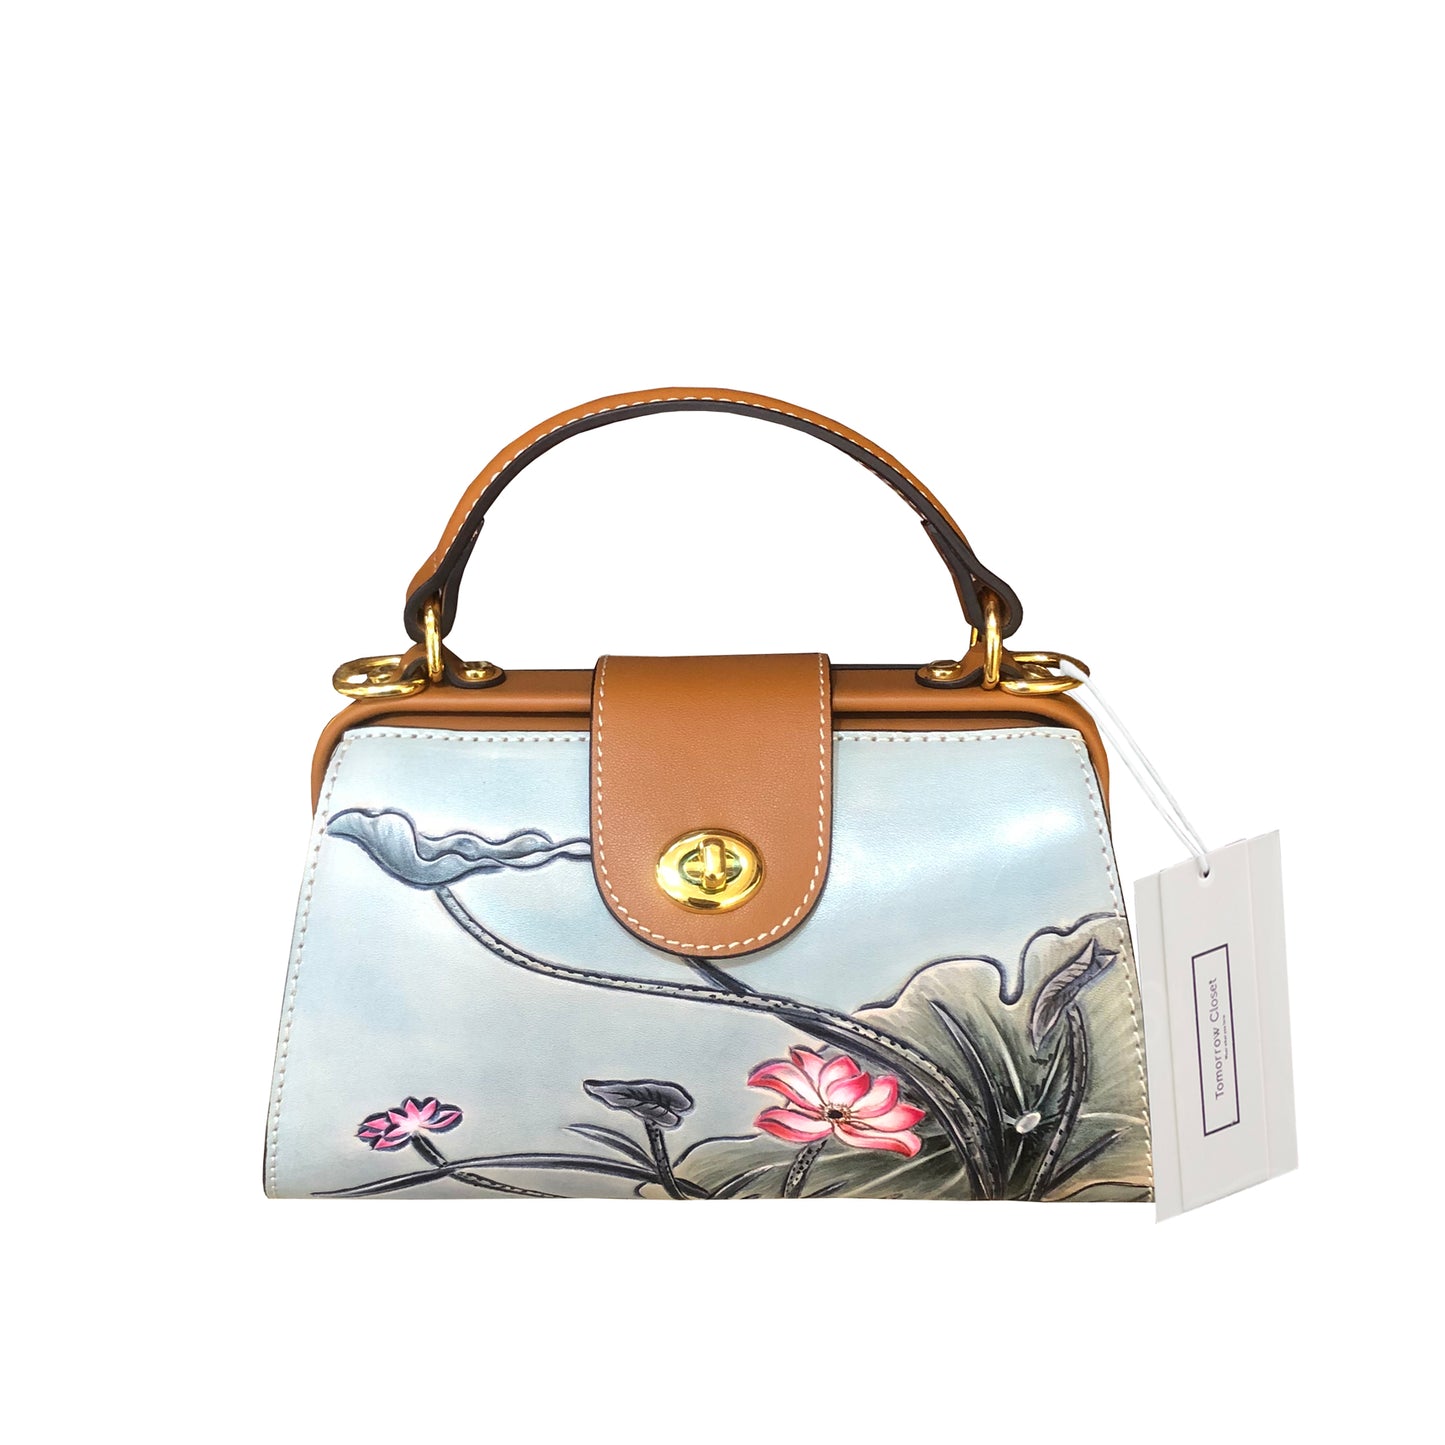 Women's genuine cowhide leather engraved handbag Palour design by Tomorrow Closet